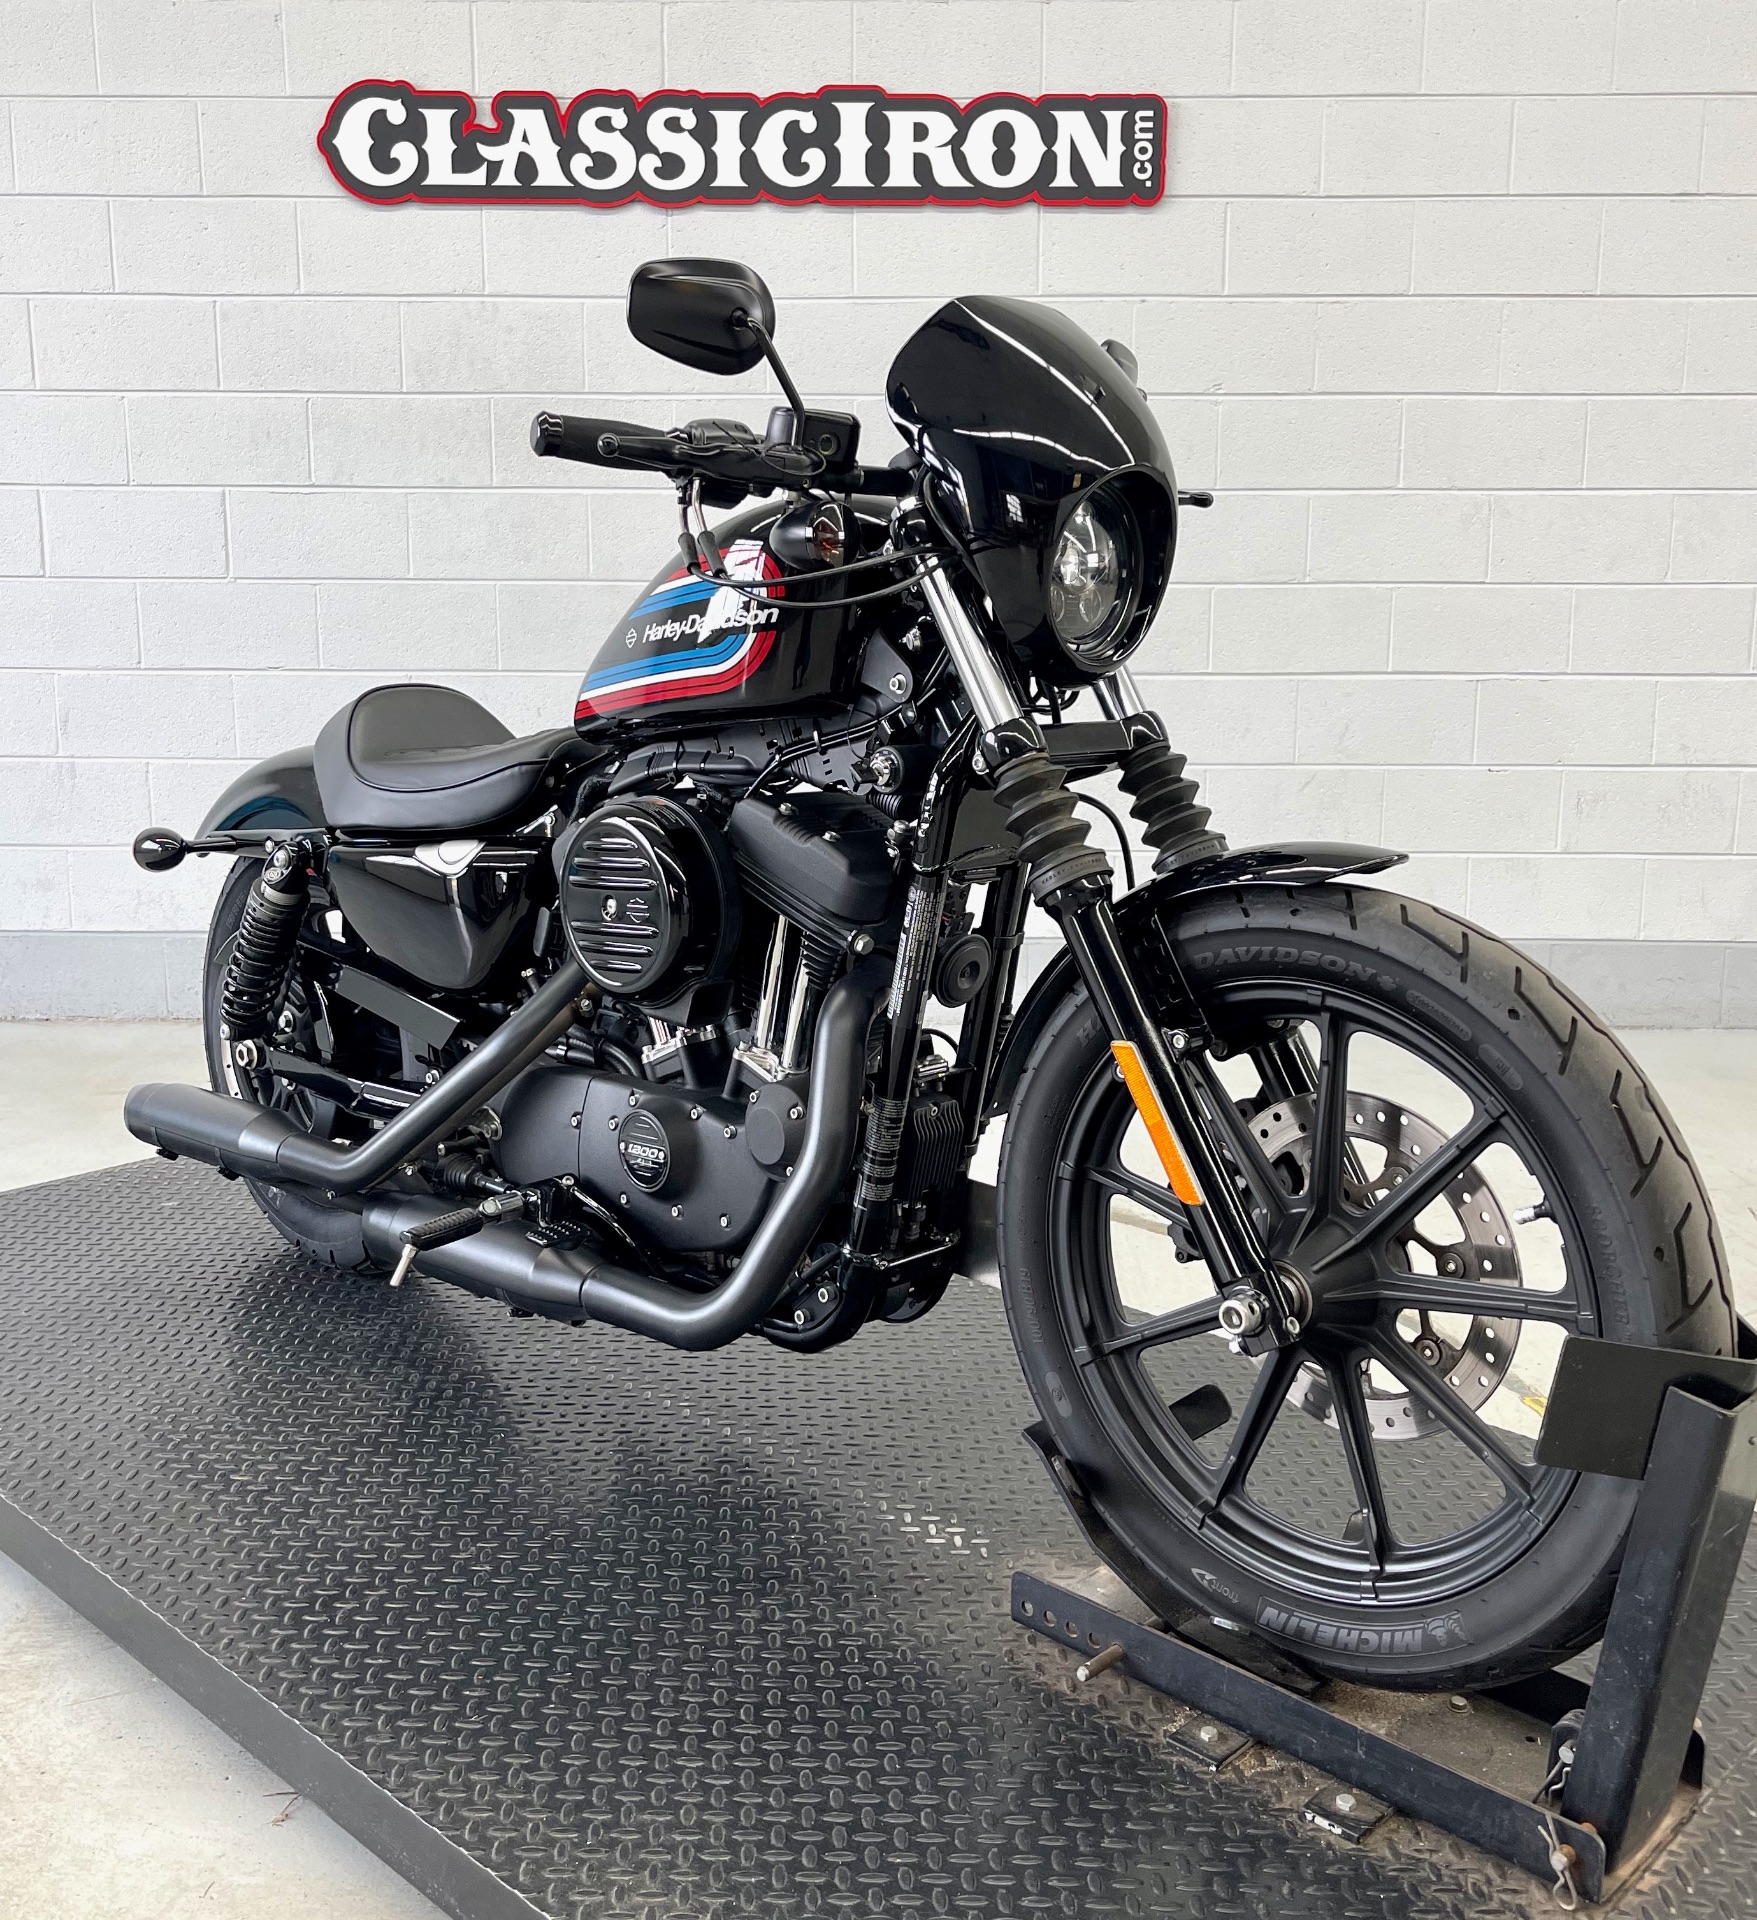 2020 Harley-Davidson Iron 1200™ in Fredericksburg, Virginia - Photo 2